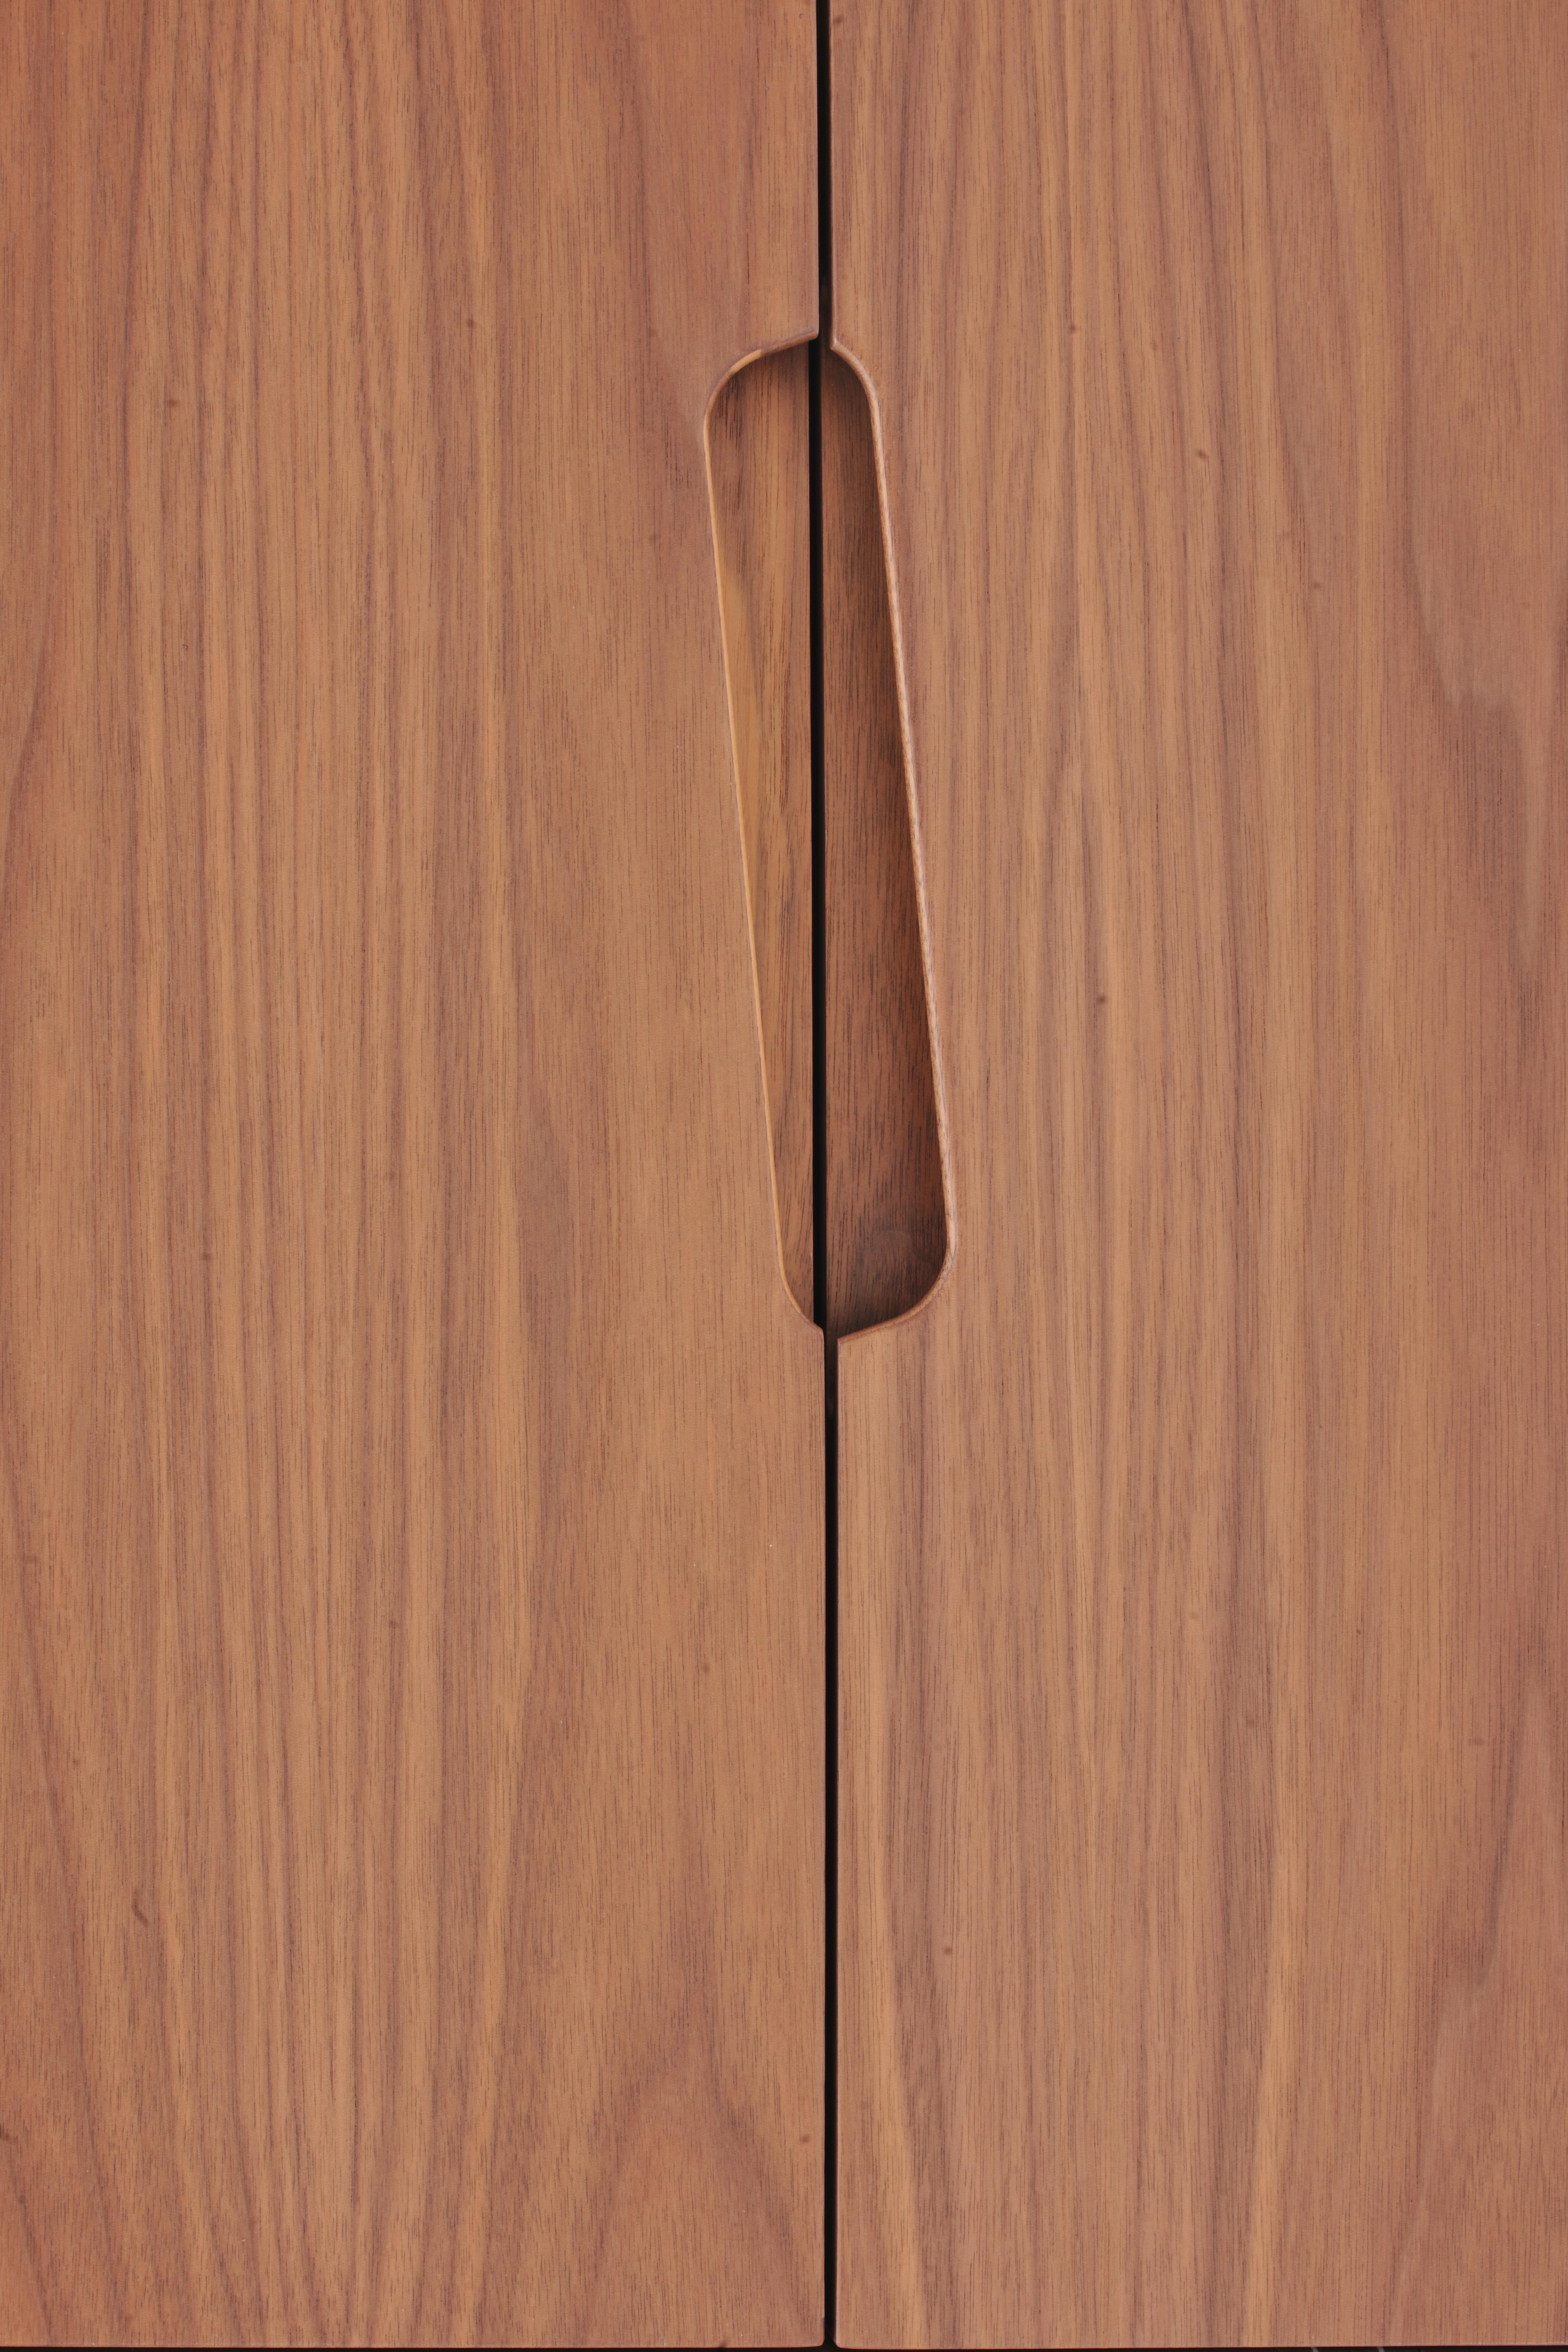 Walnut Malibù Contemporary Sideboard in walnut Wood, by Morelato